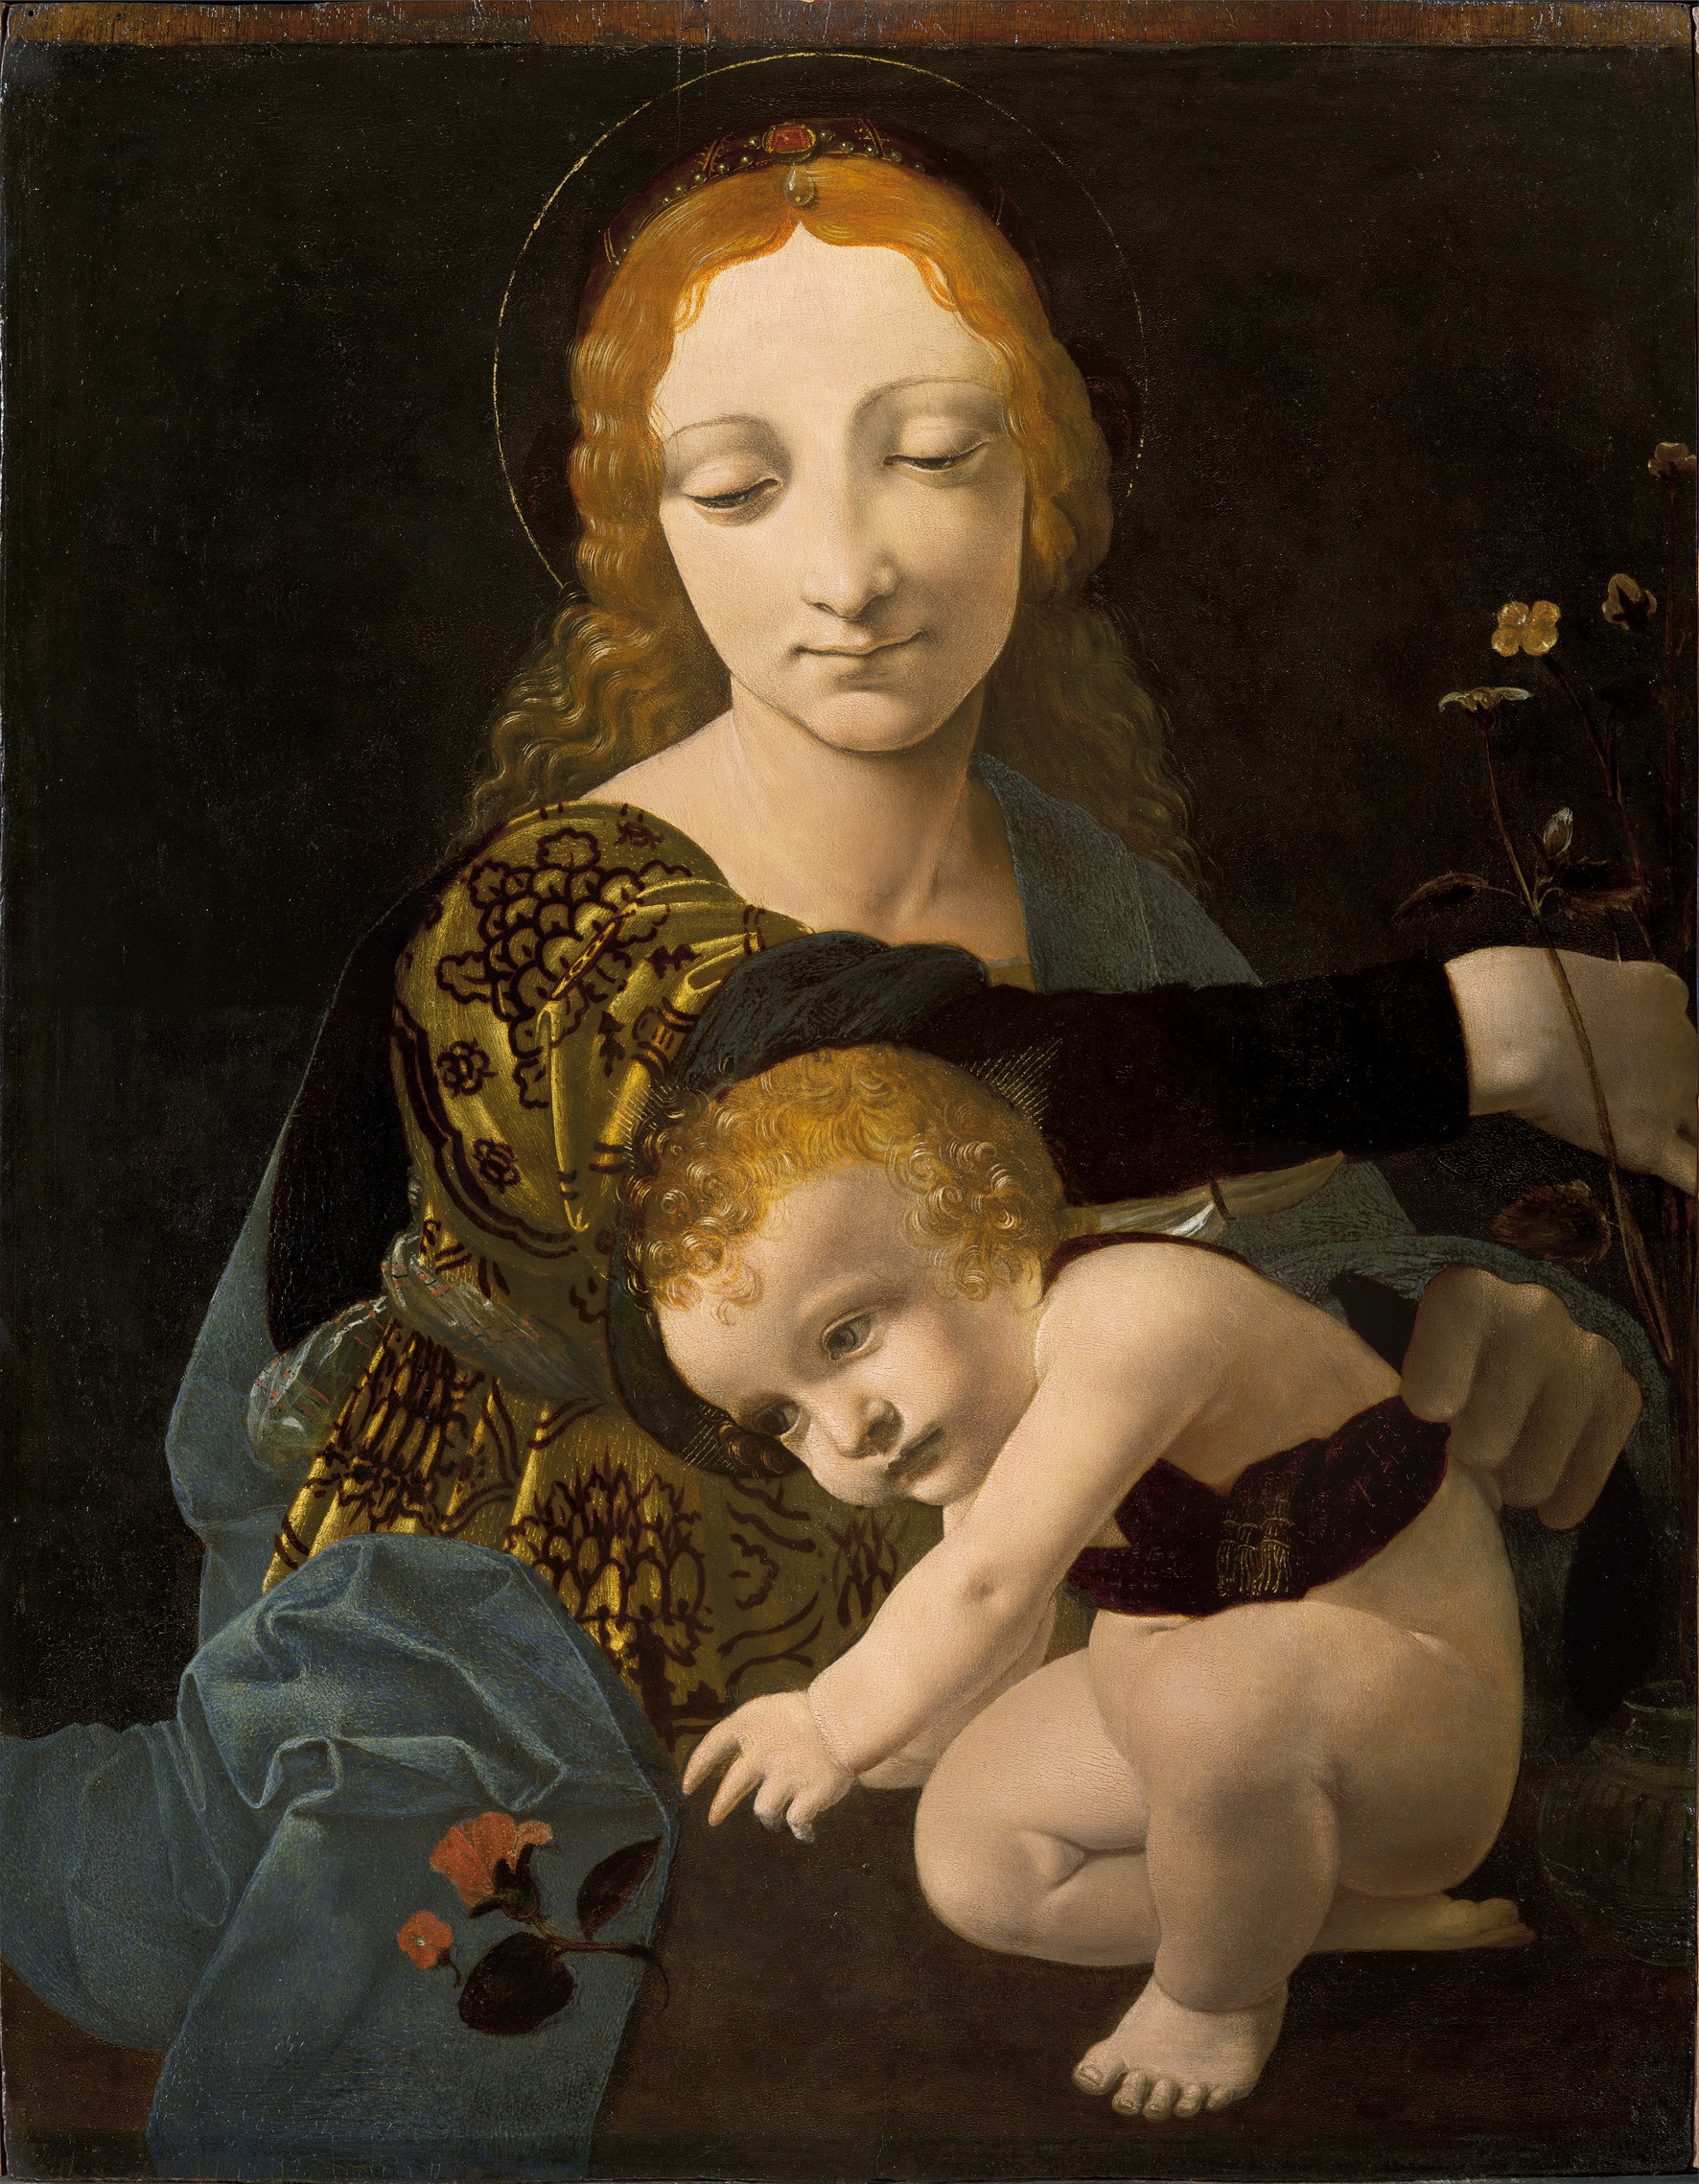 聖母子像 by Giovanni Antonio Boltraffio - 推定1495年 - 45.5 x 35.6 